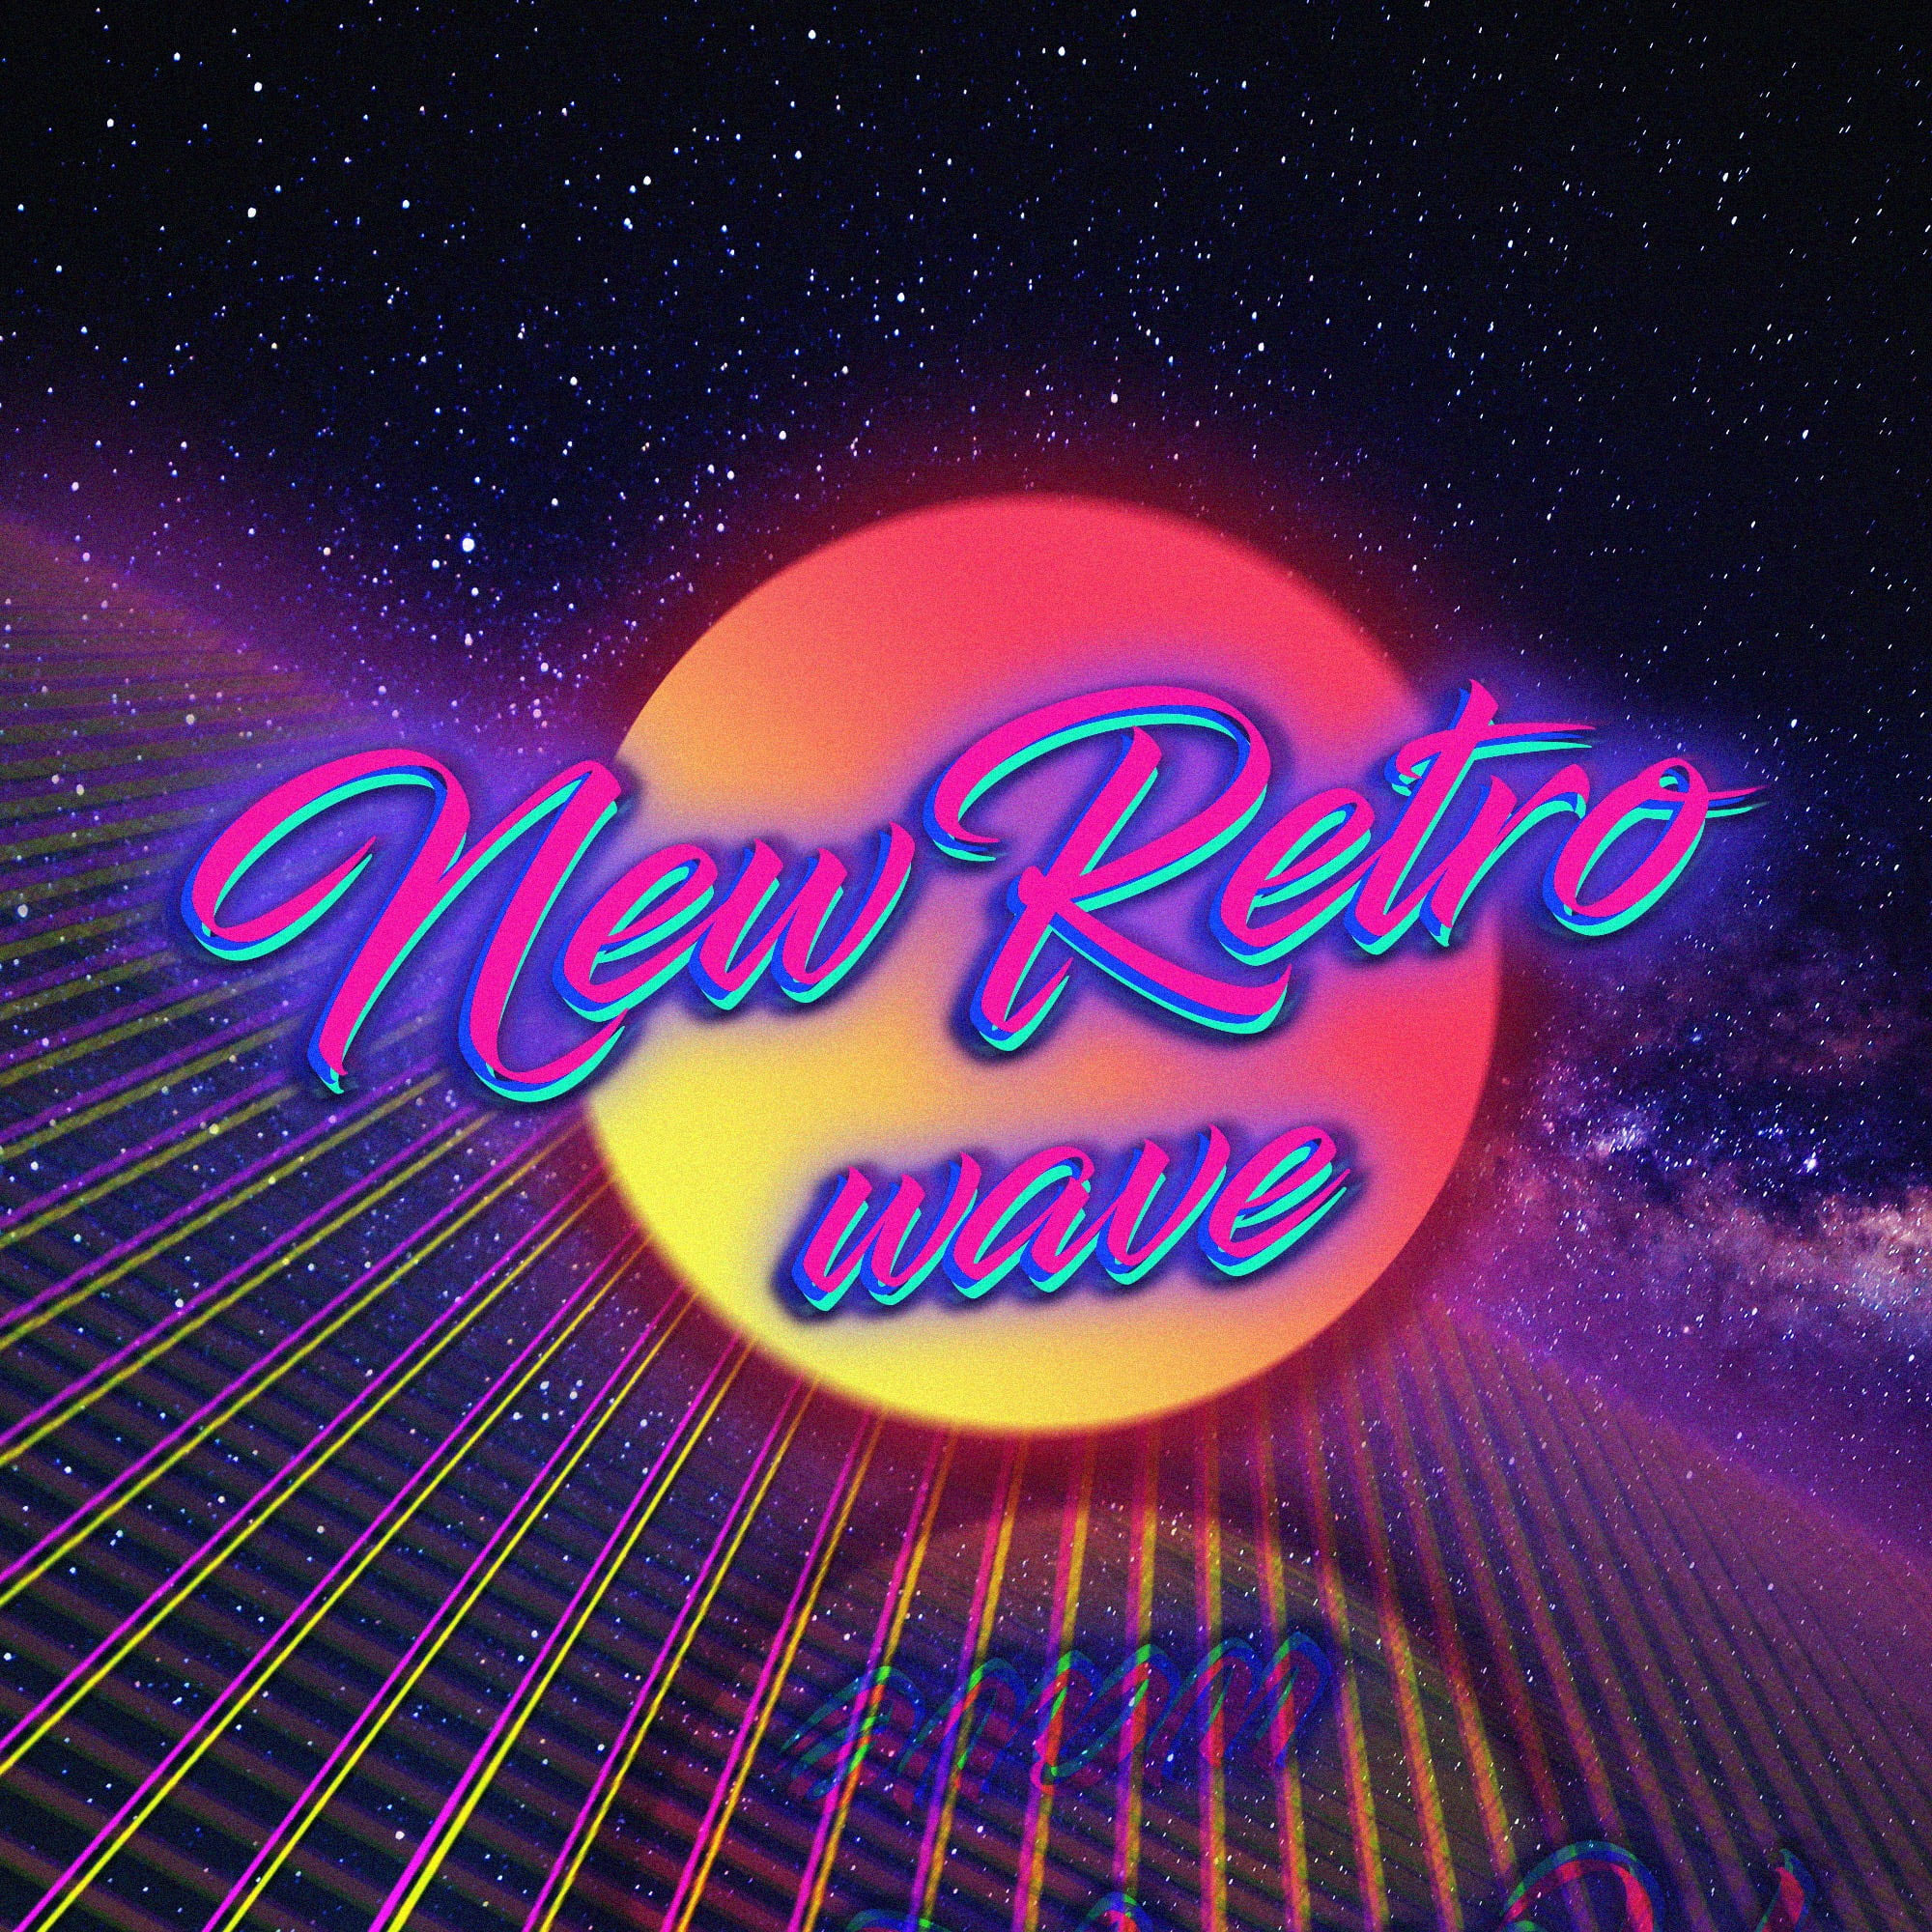 New Retro wave text wallpaper, Retro style, 1980s, digital art, neon, vintage